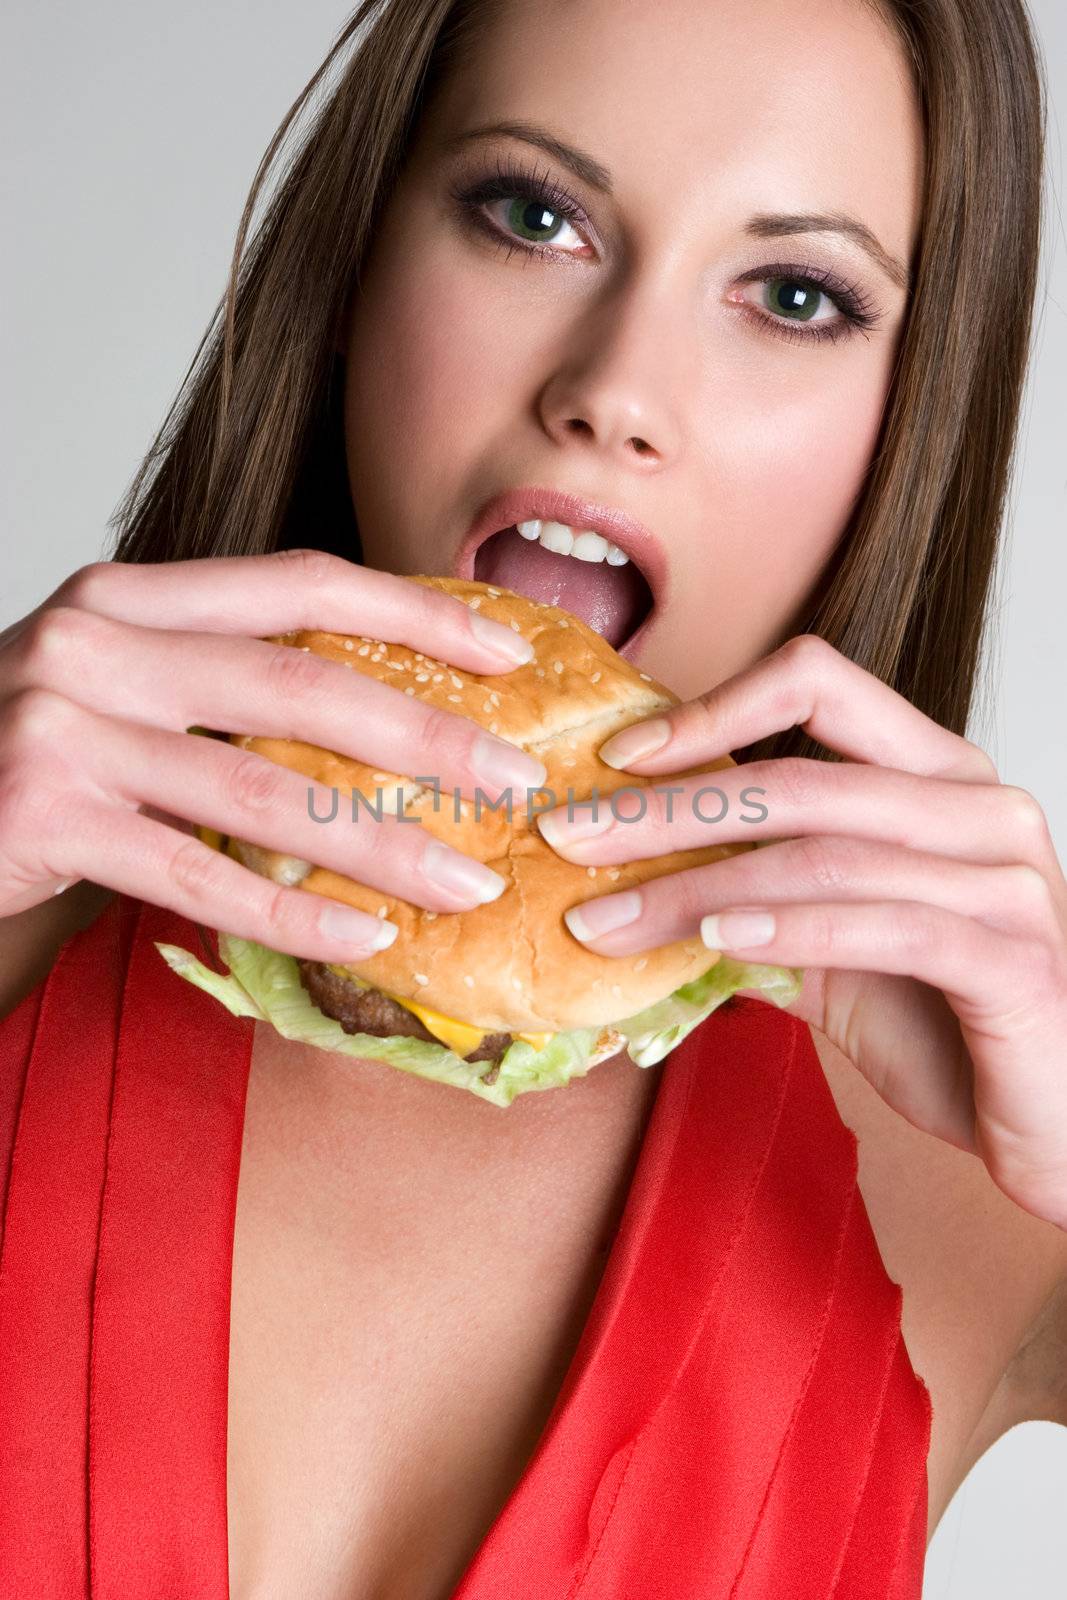 Beautiful woman eating hamburger